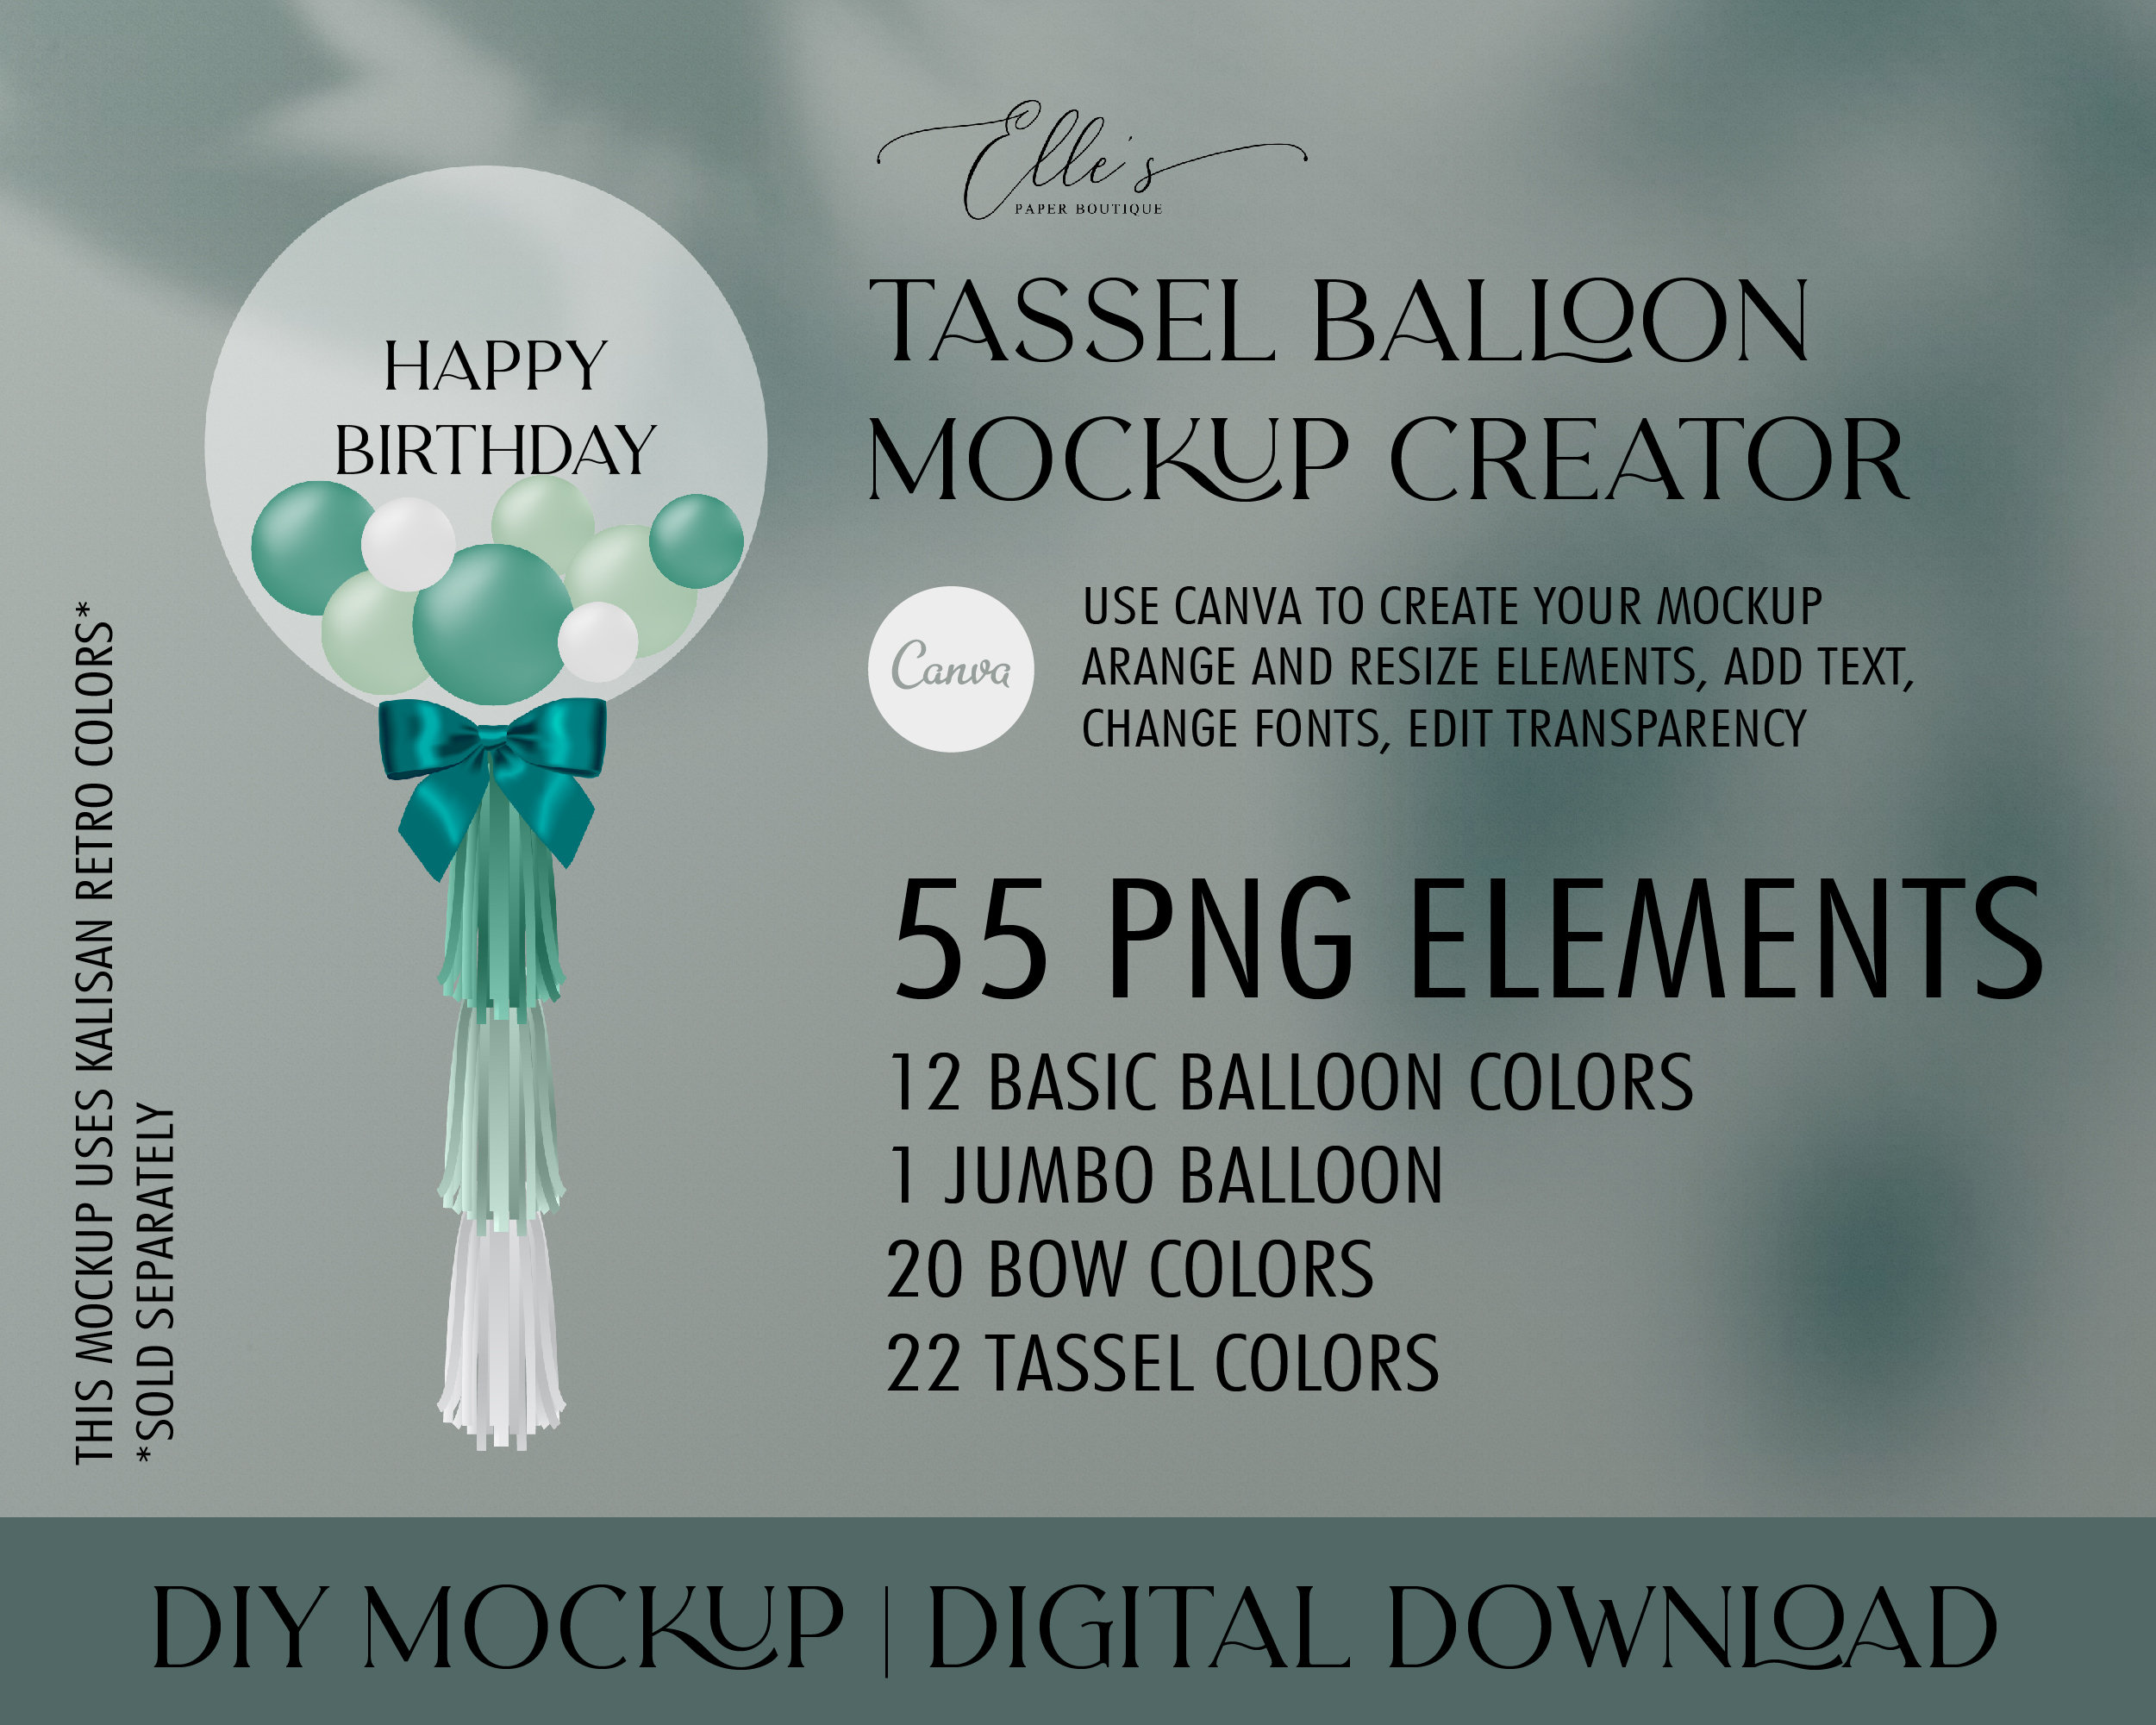 DIY Bluey Balloon Sculpture, Bluey Birthday Decorations, Bluey Party Decor,  Bluey Balloon Stack, Bluey Theme Party, Bluey Balloon Tower 